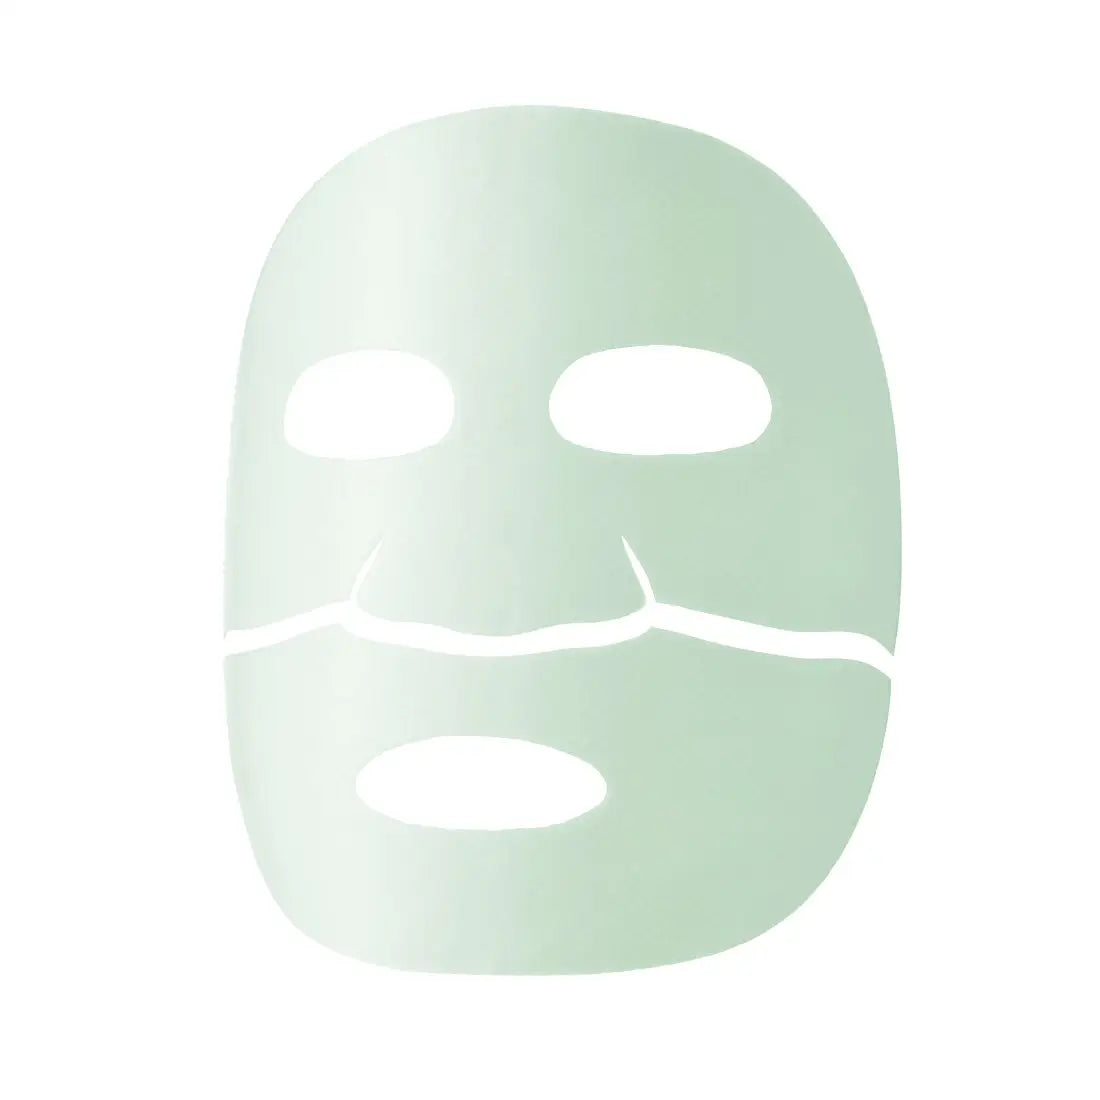 Venn Collagen Intensive Phyto Retinol Renewal Mask (2 treatments: 2 x 23g)